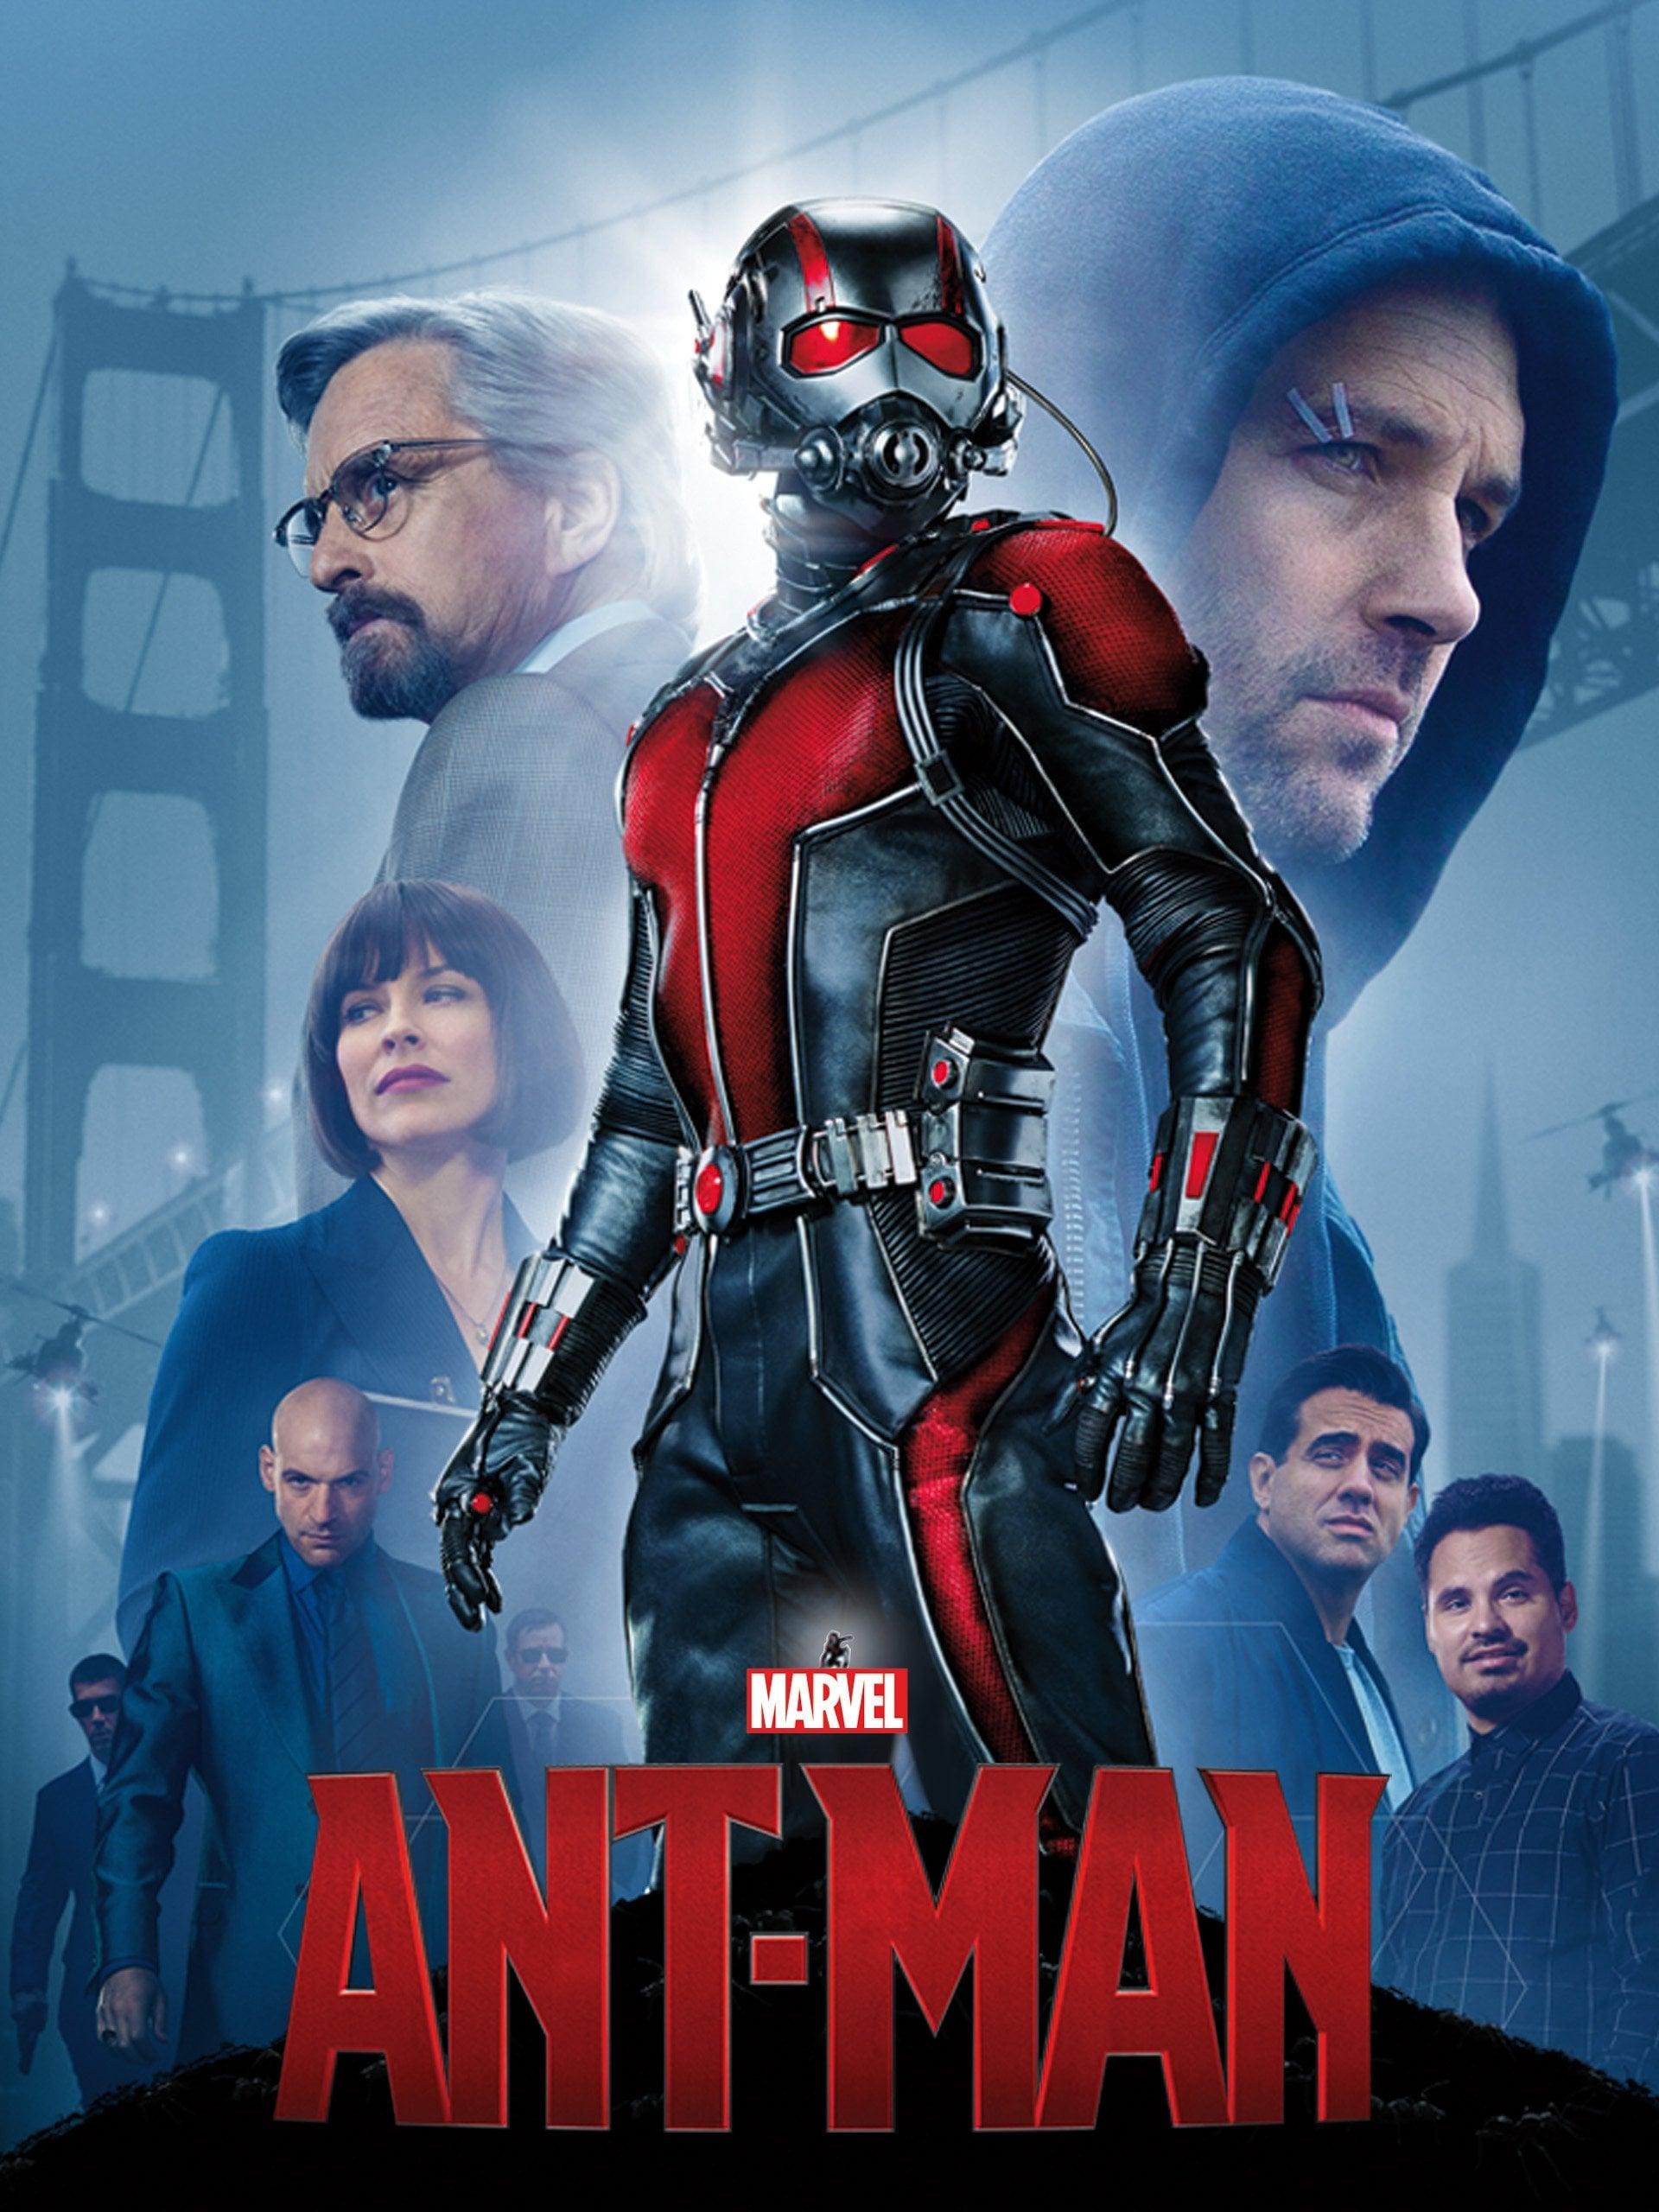 Ant-Man poster